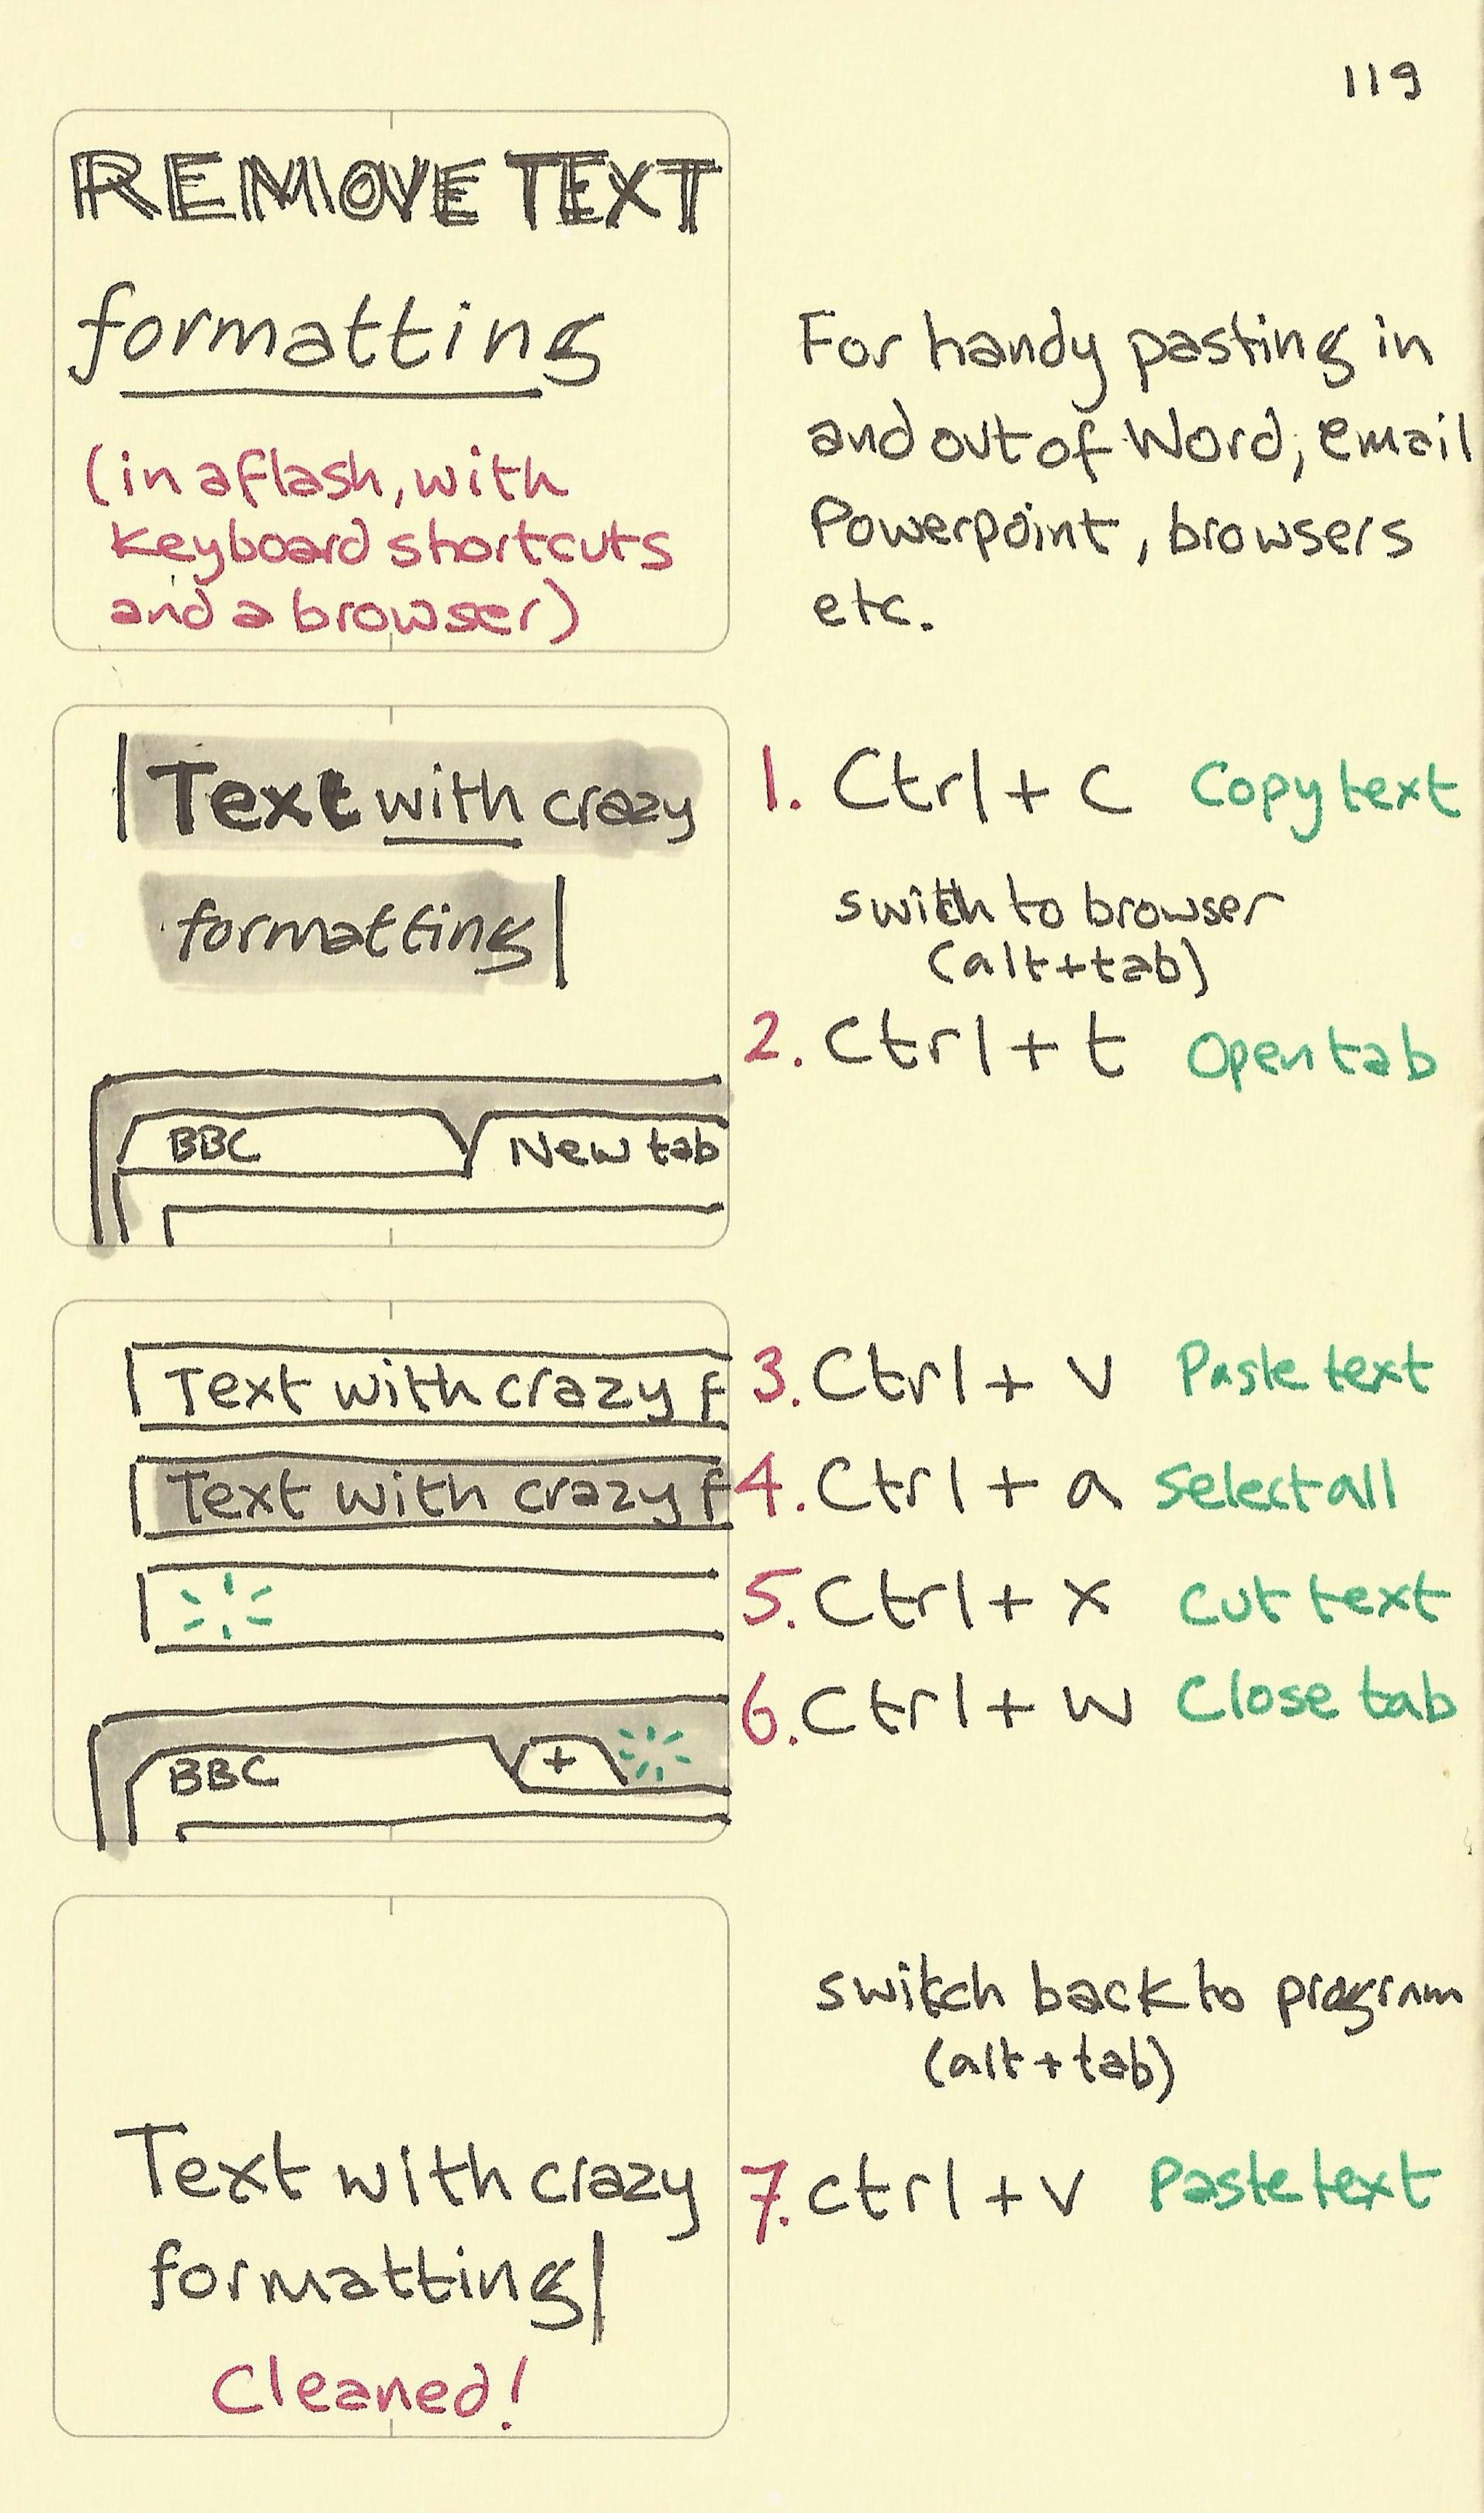 Remove text formatting - Sketchplanations